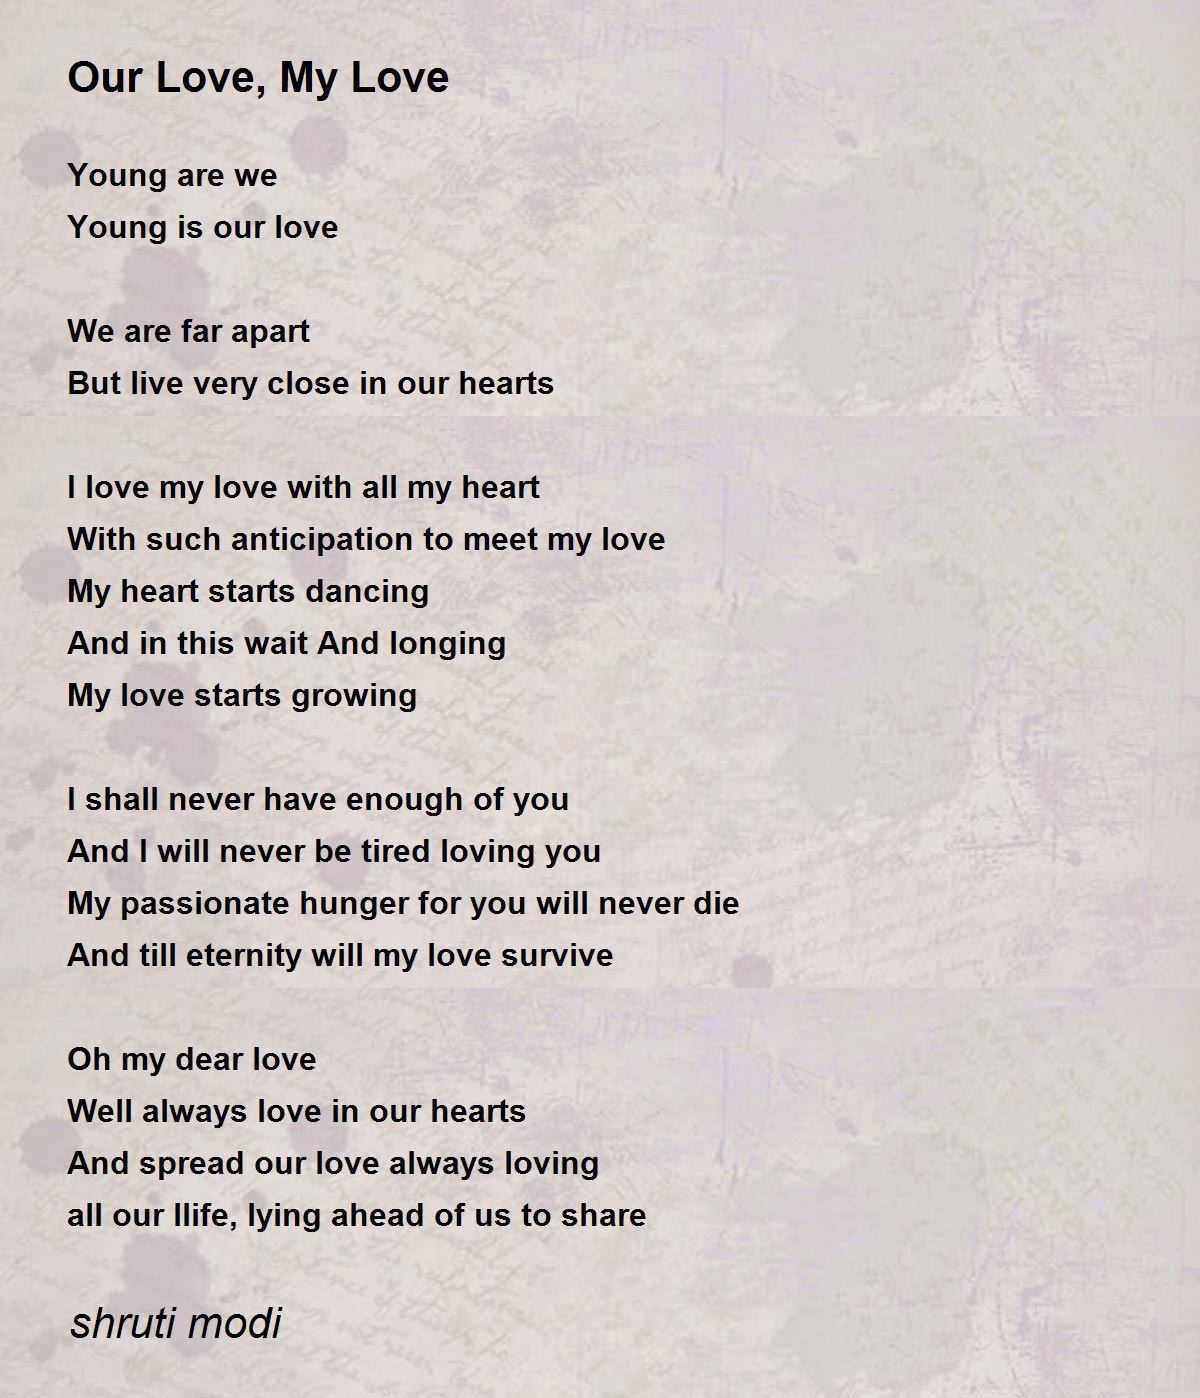 Our Love (Lyrics) - Our Love (Lyrics) Poem by Sharon 333